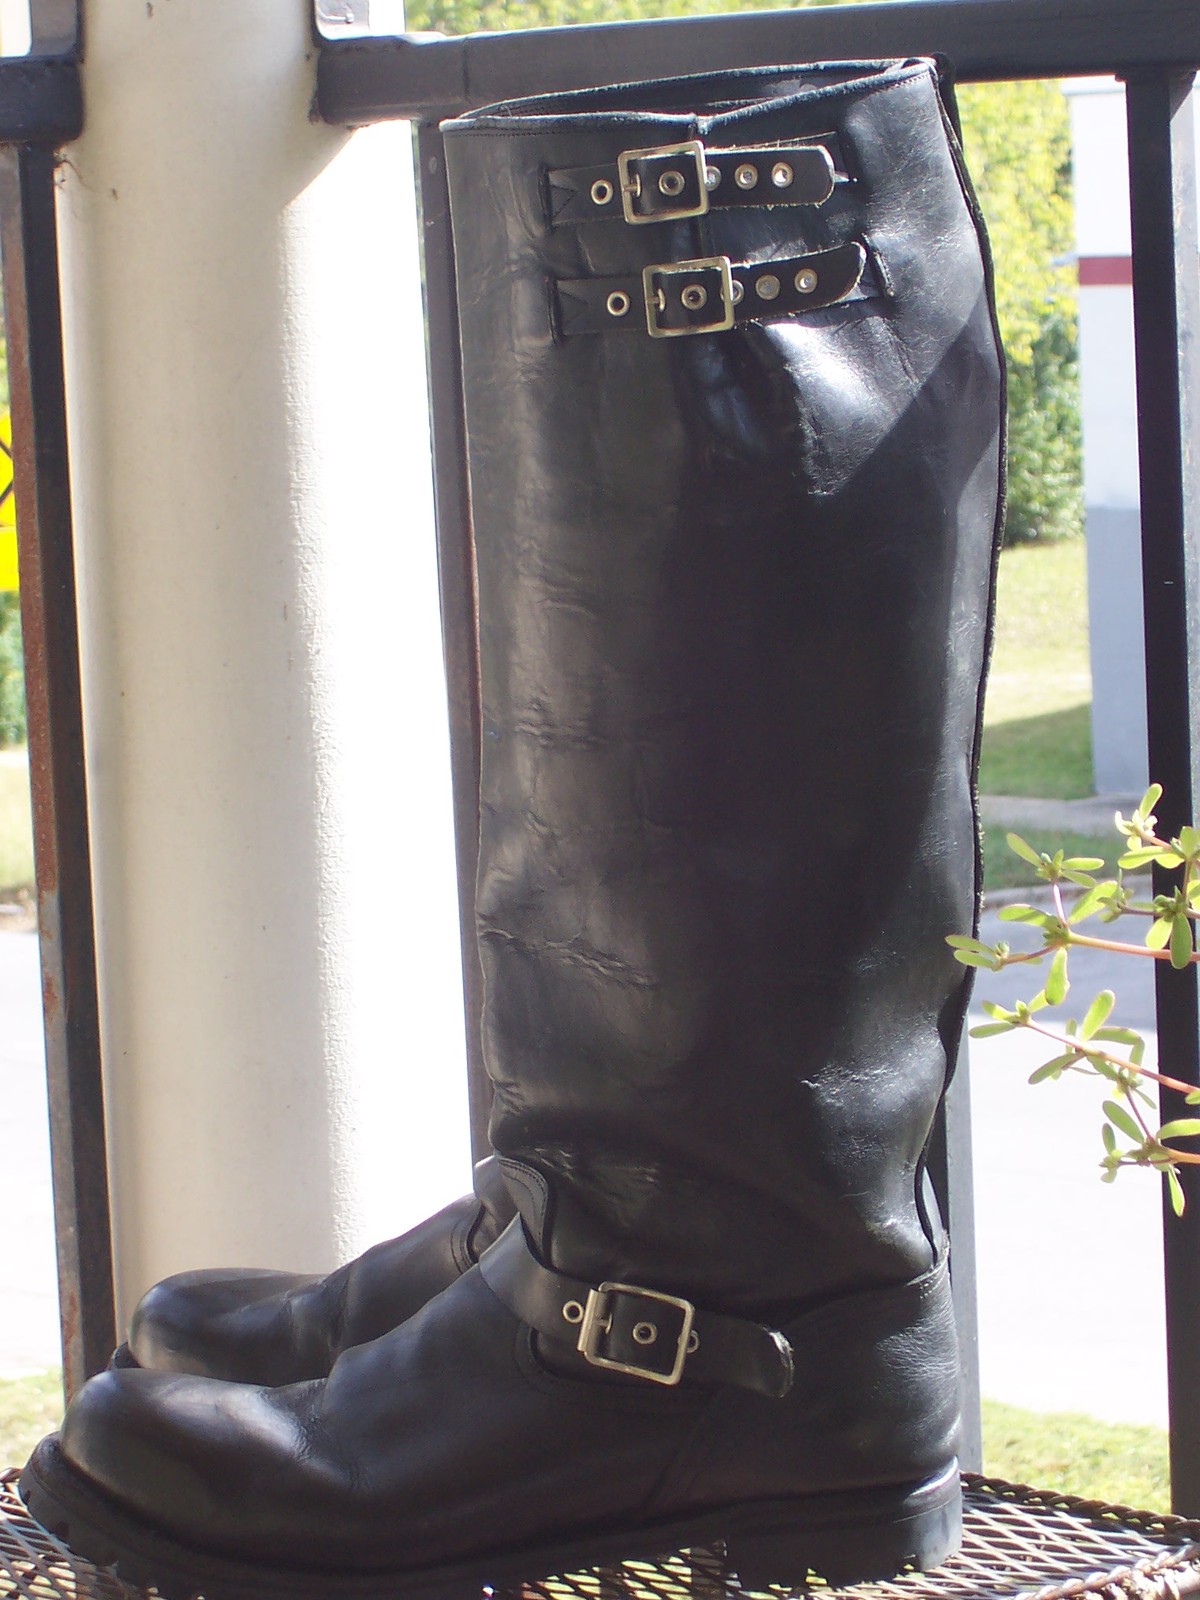 mens cowboy boots size 14 wide